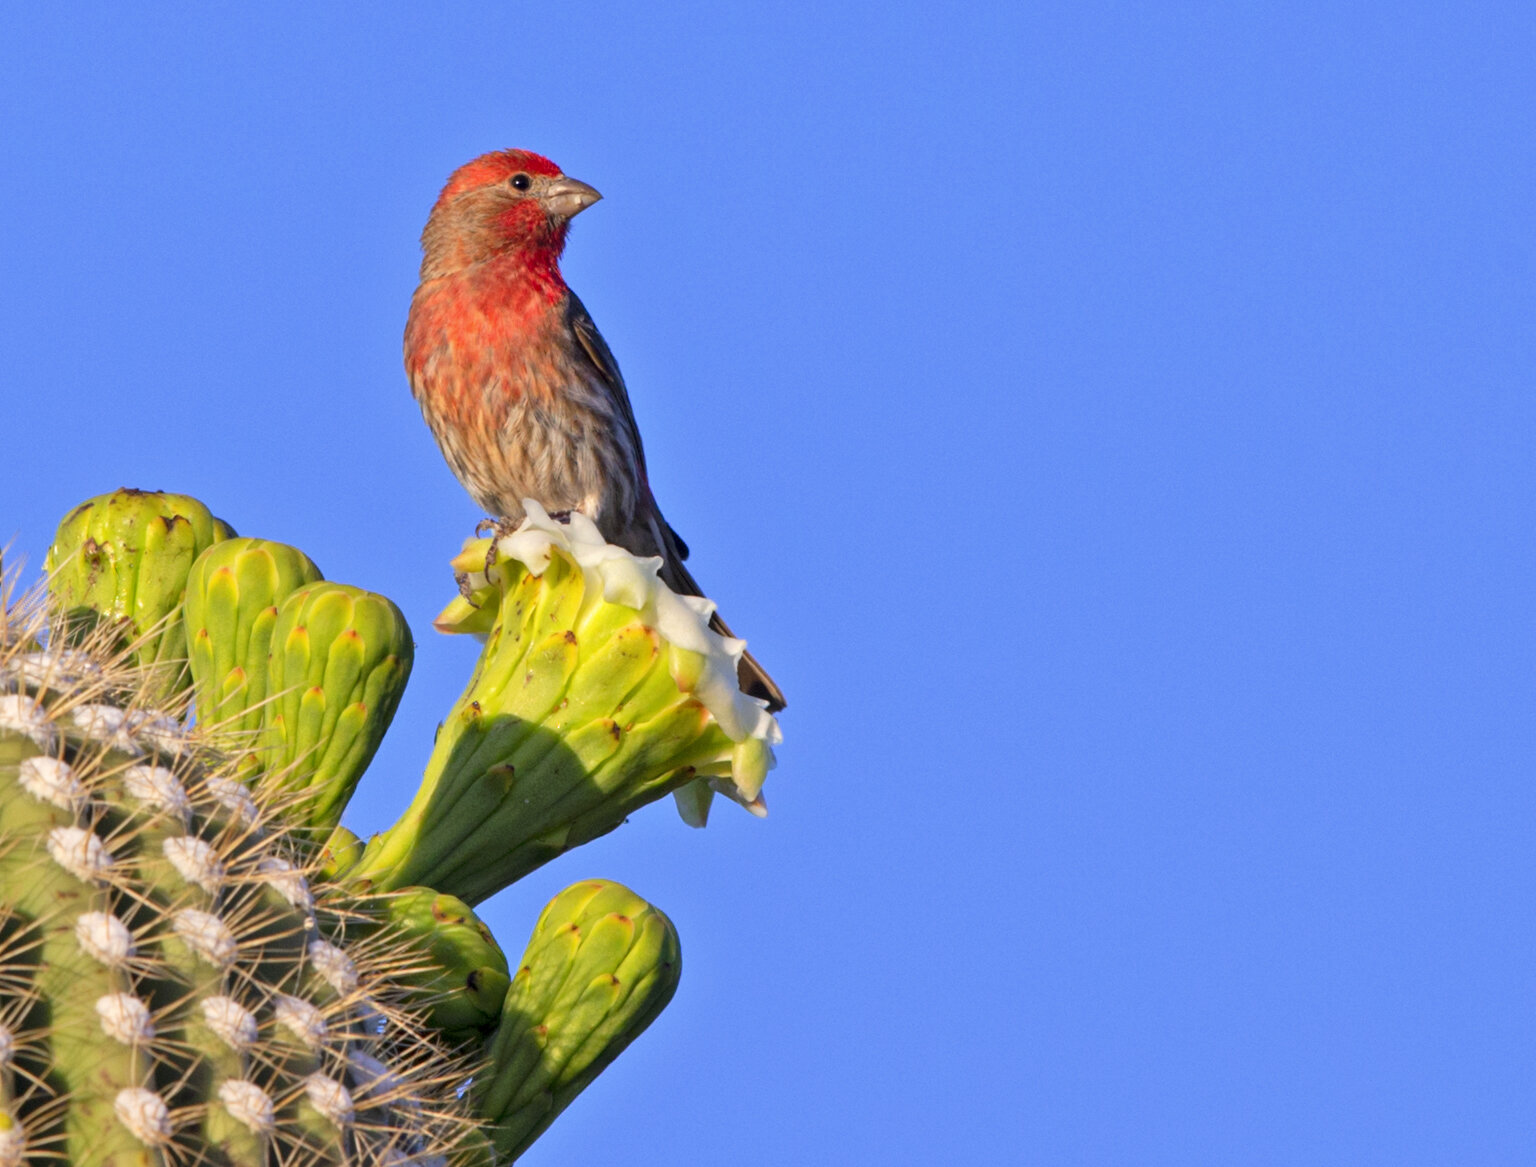 Colorful bird feathers may explain evolution paradox - Futurity